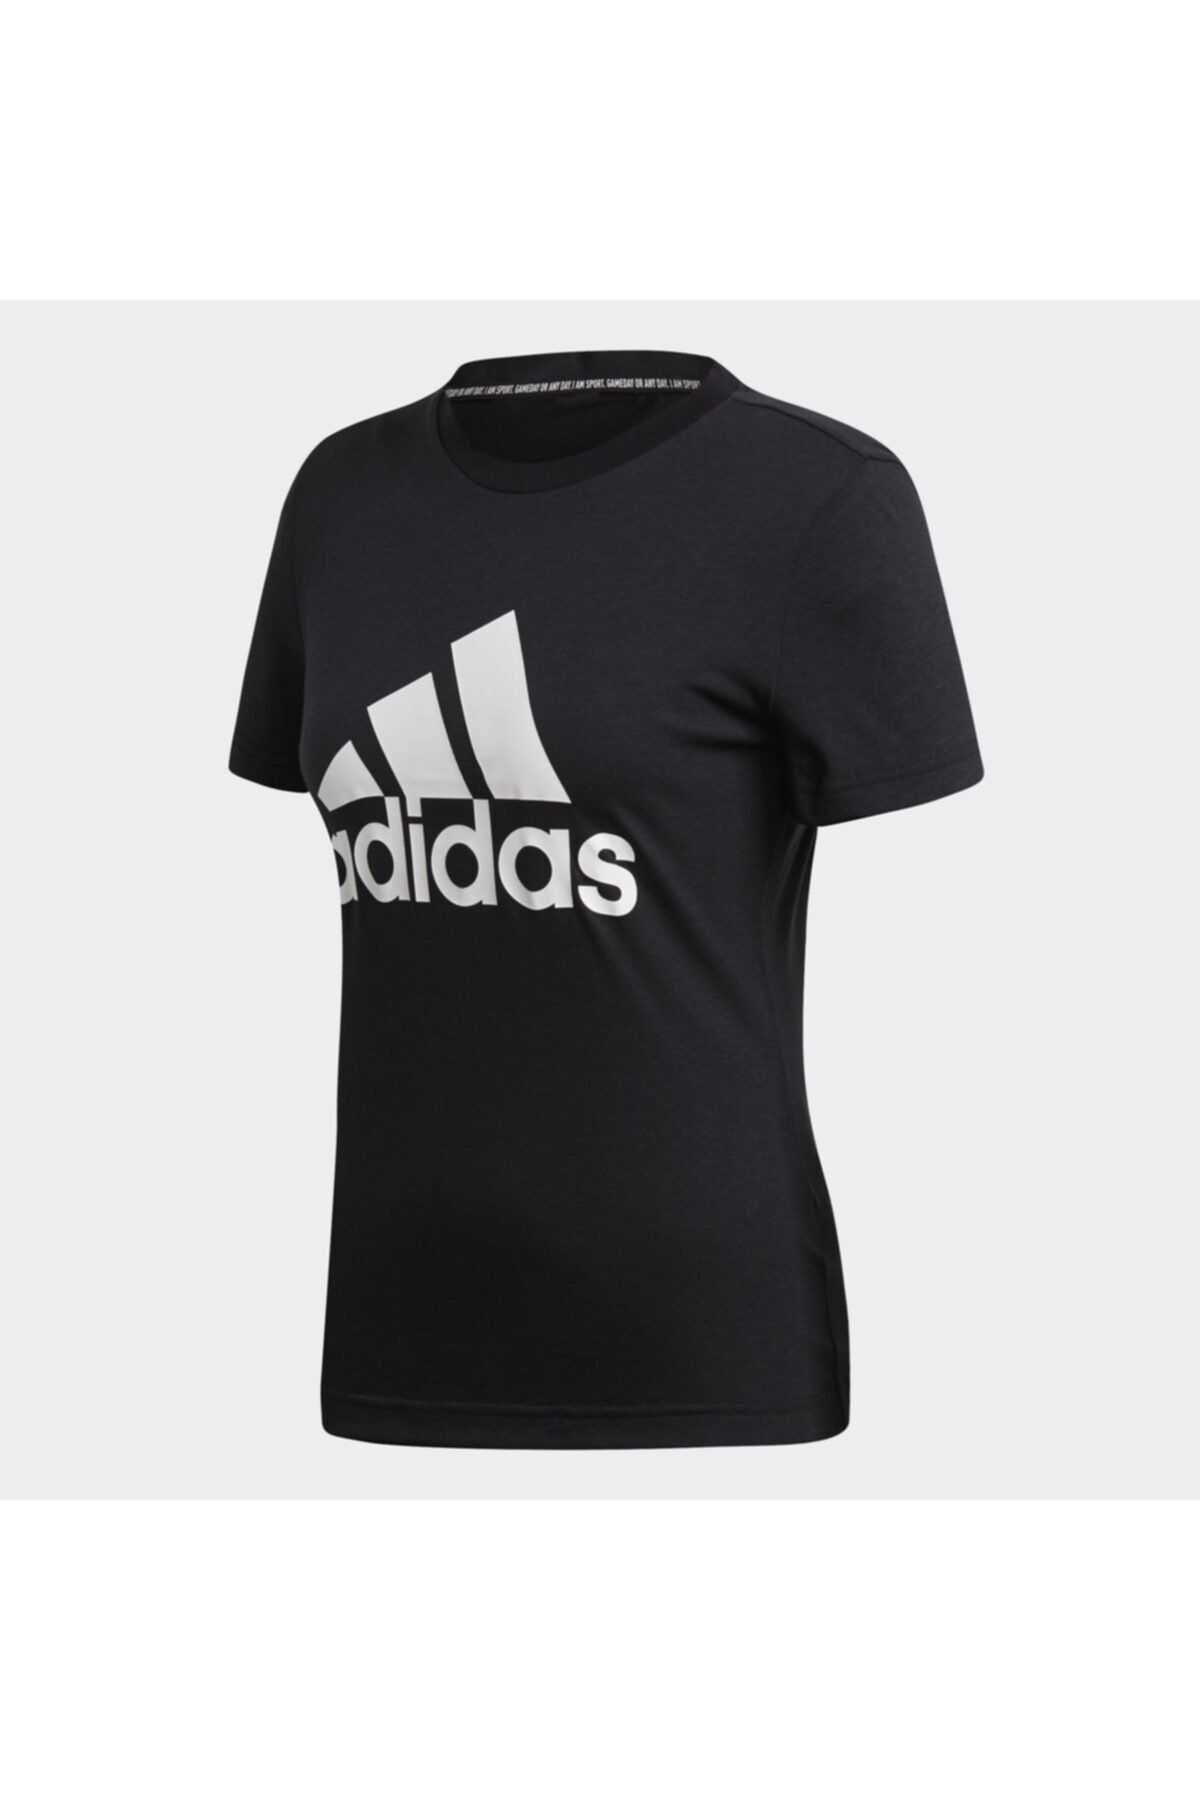 adidas W MH BOS TEE Siyah Kadın T-Shirt 101117649